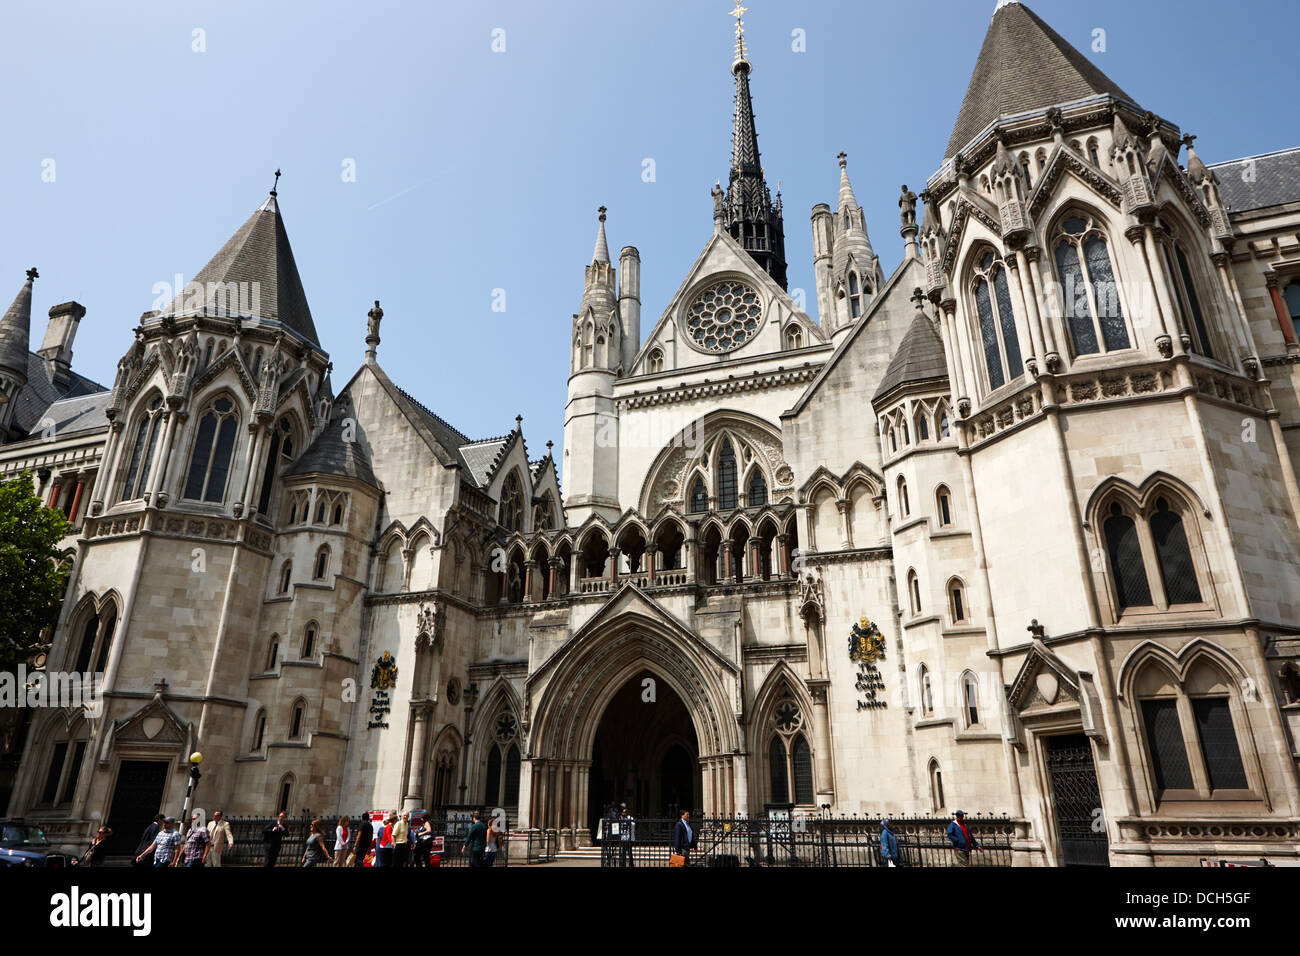 La Royal Courts of Justice London England UK Banque D'Images